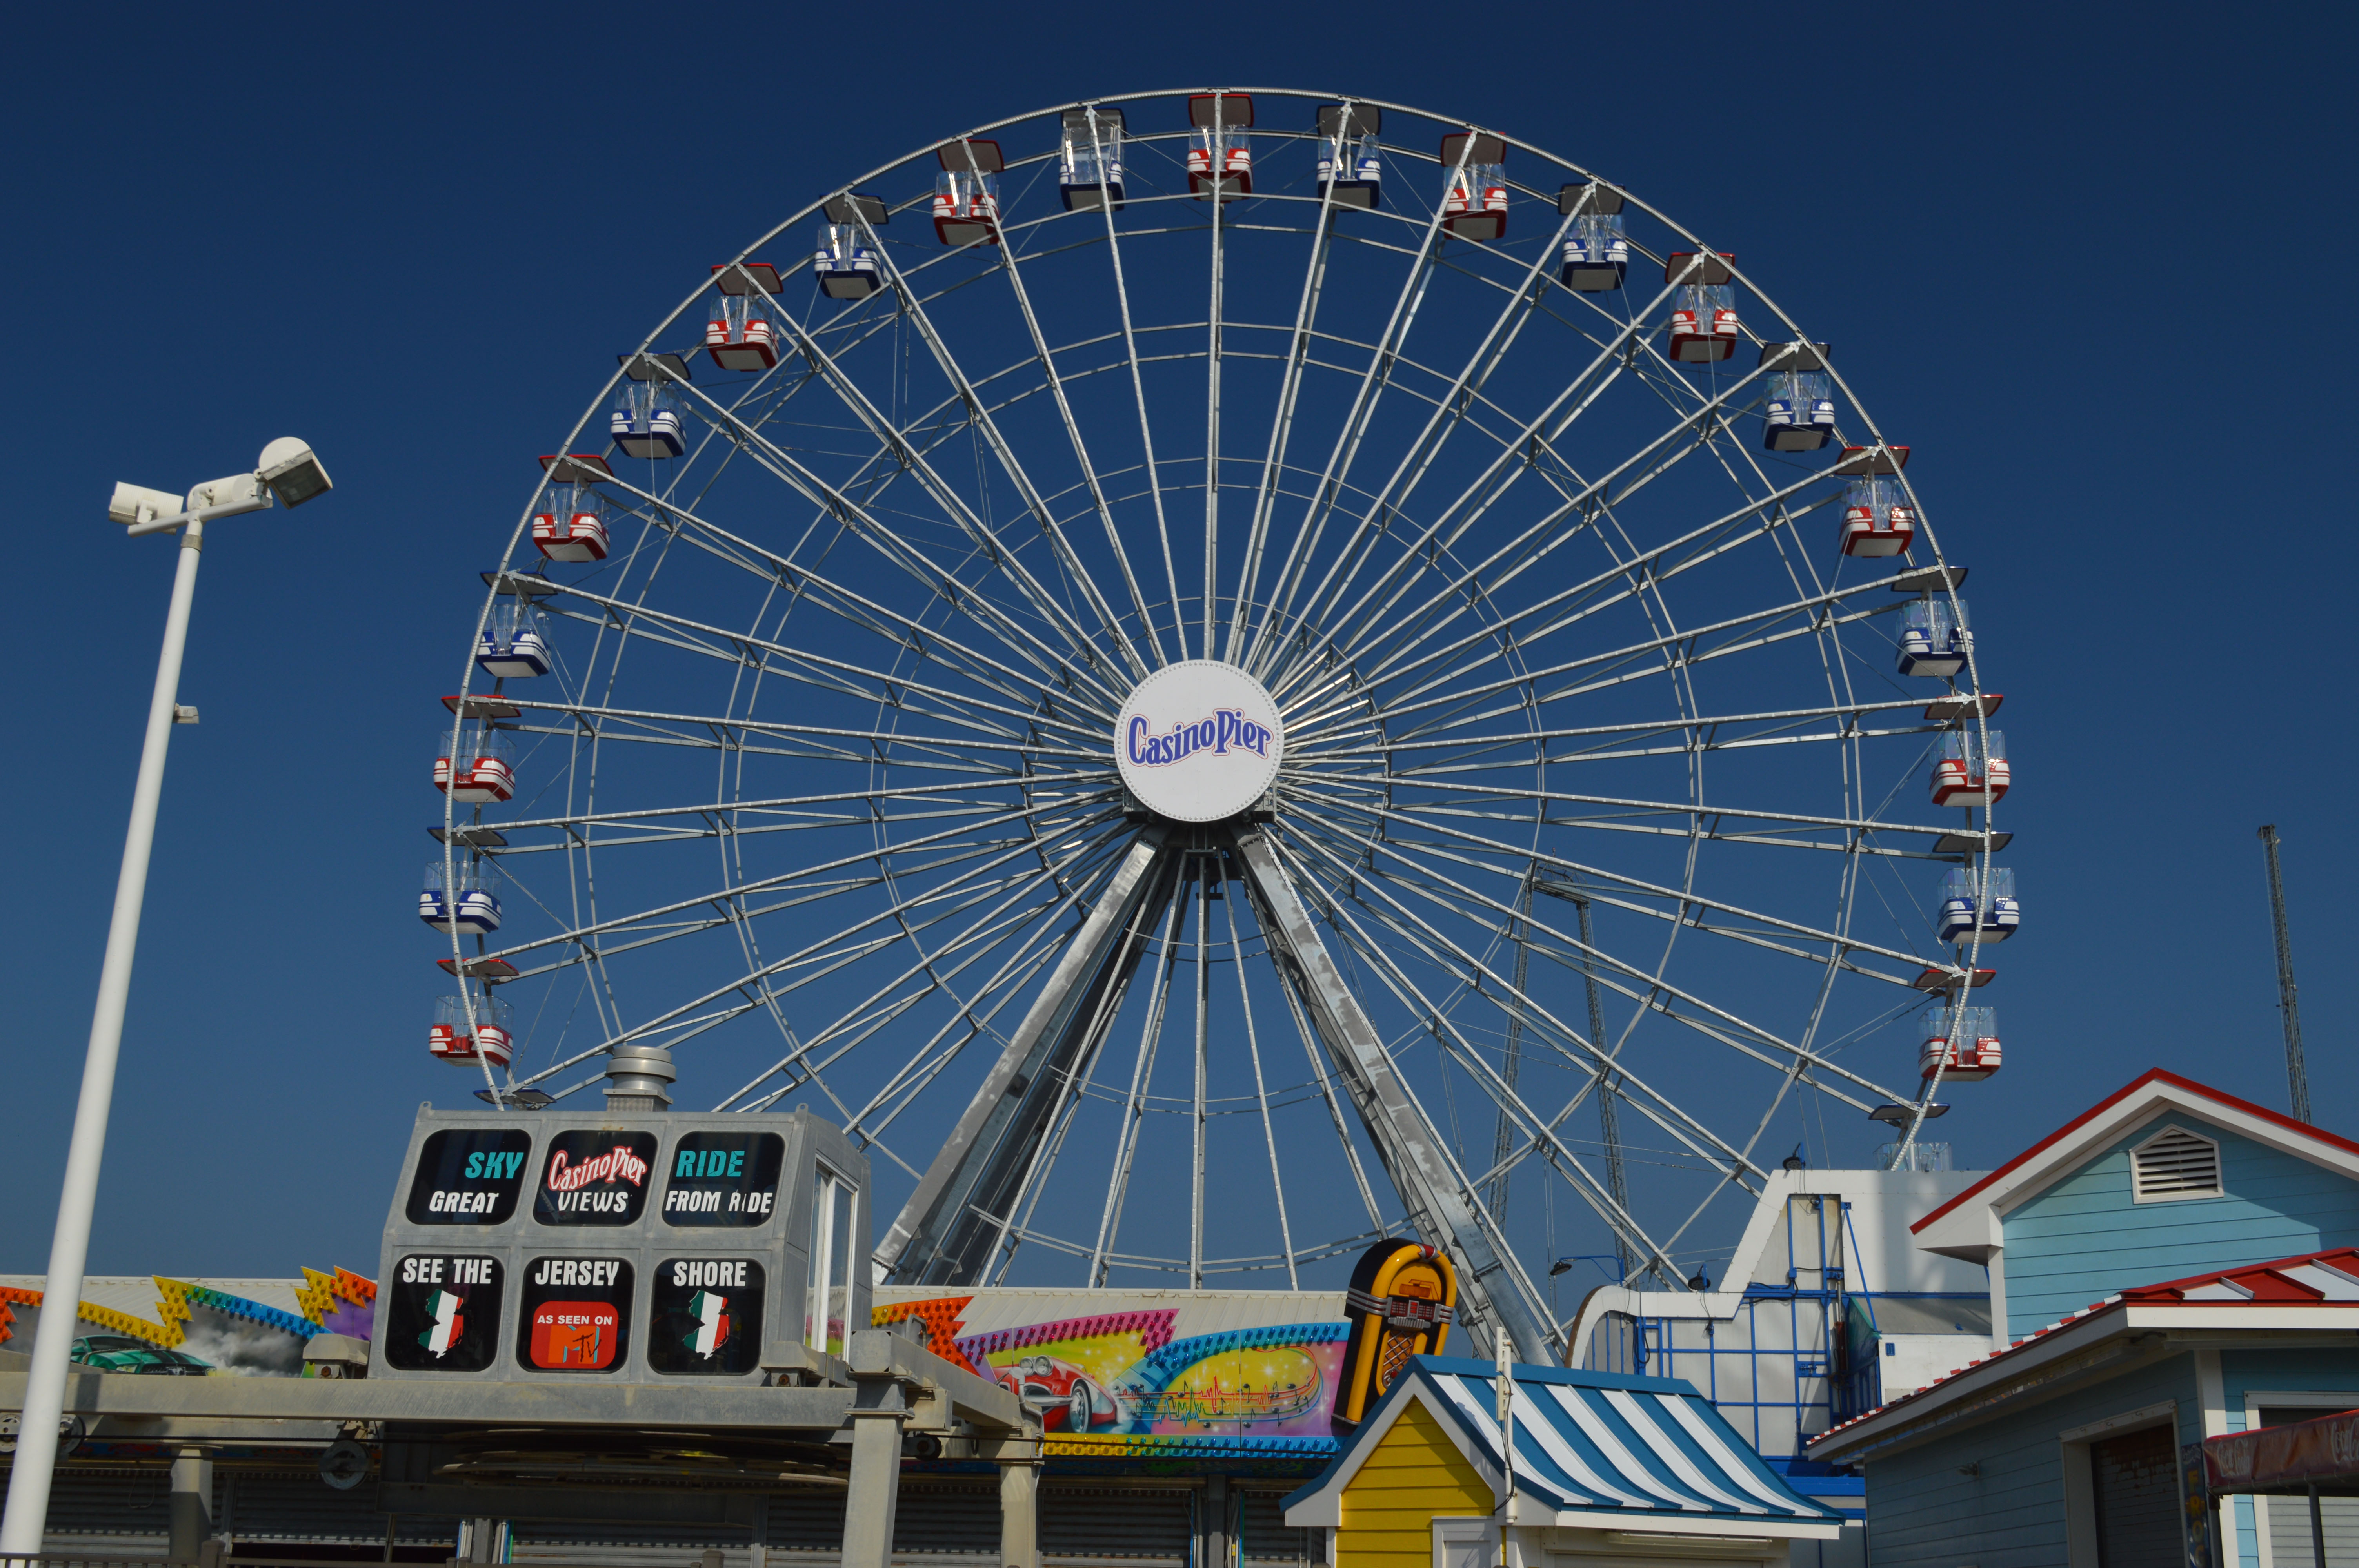 New Ferris Wheel Towers Over Casino Pier, But When Will it Begin ...